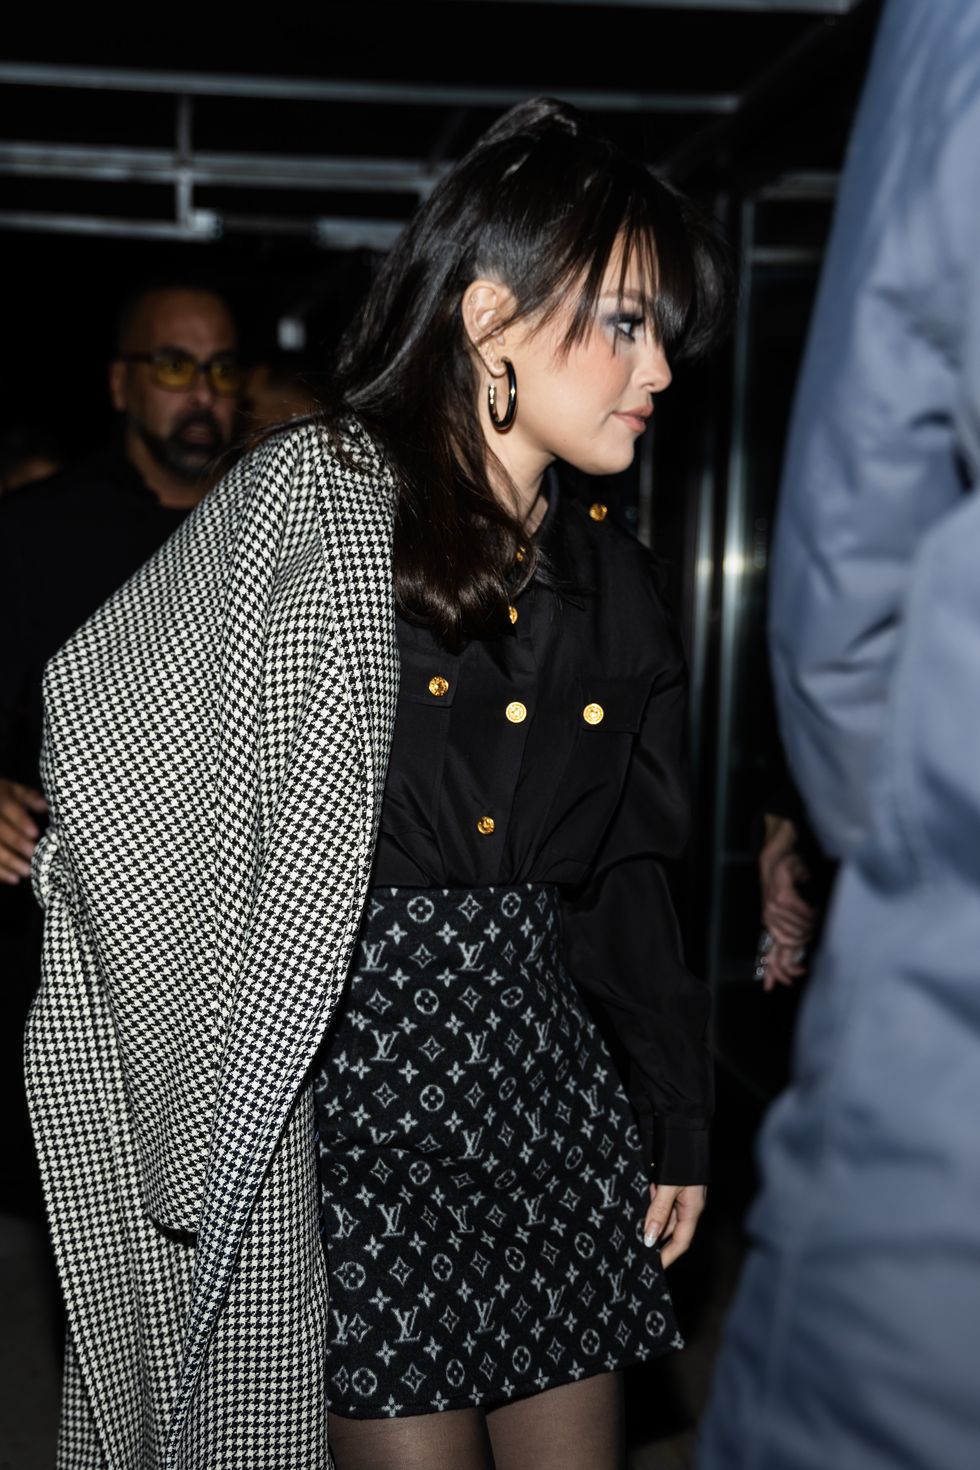 Disney Porn Selena Gomez Tights - Selena Gomez Wears Miniskirt and Houndstooth Coat in NYC